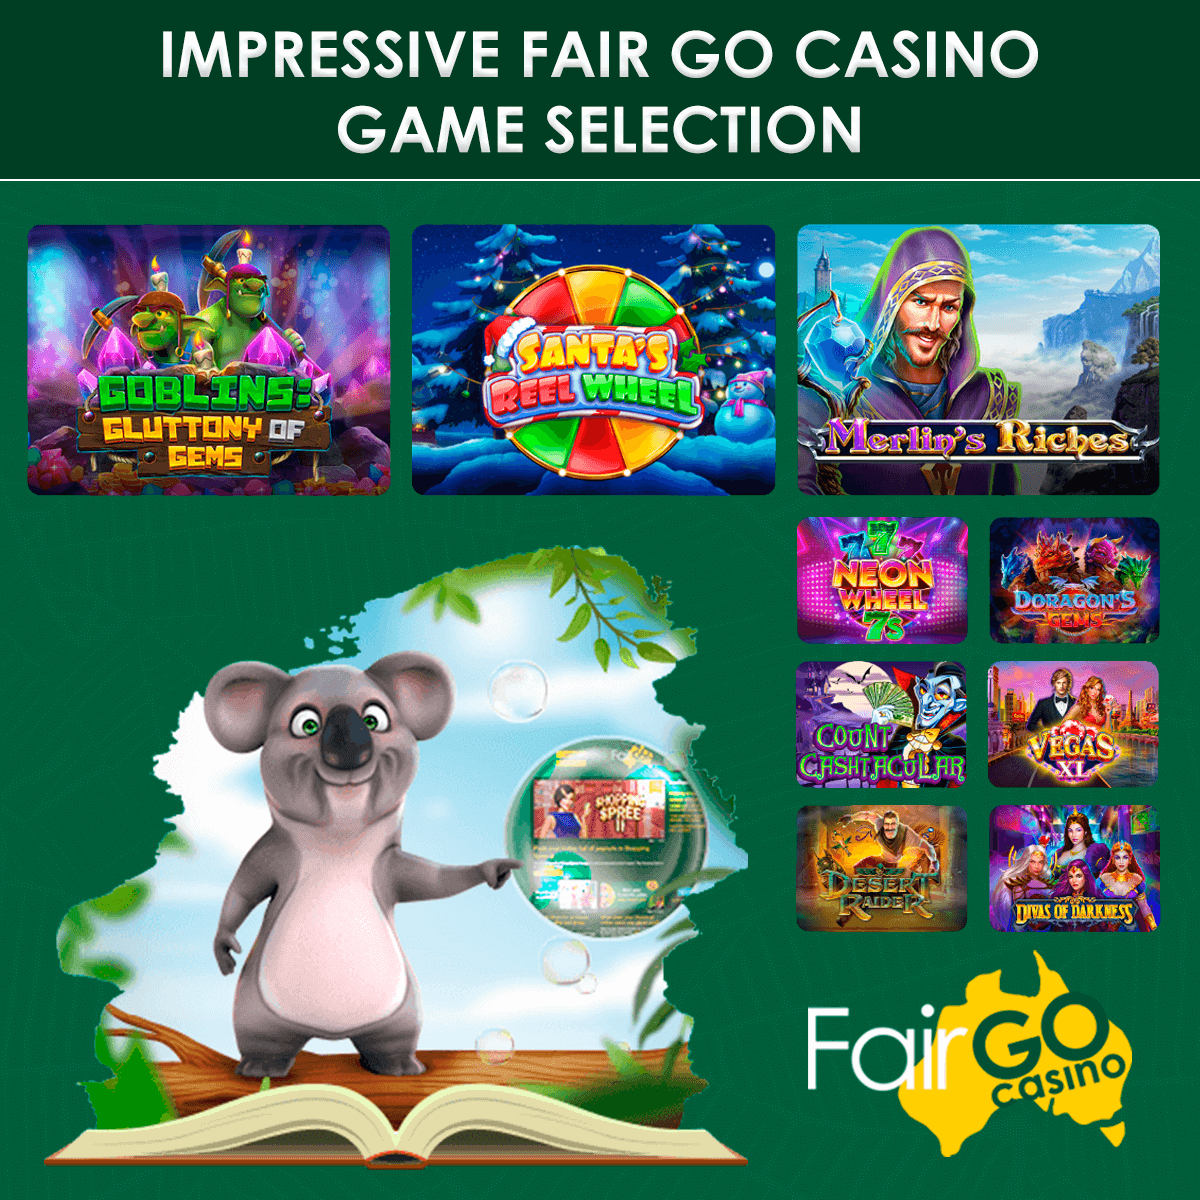 Fair Go Online Casino's Commitment to Responsible Gambling